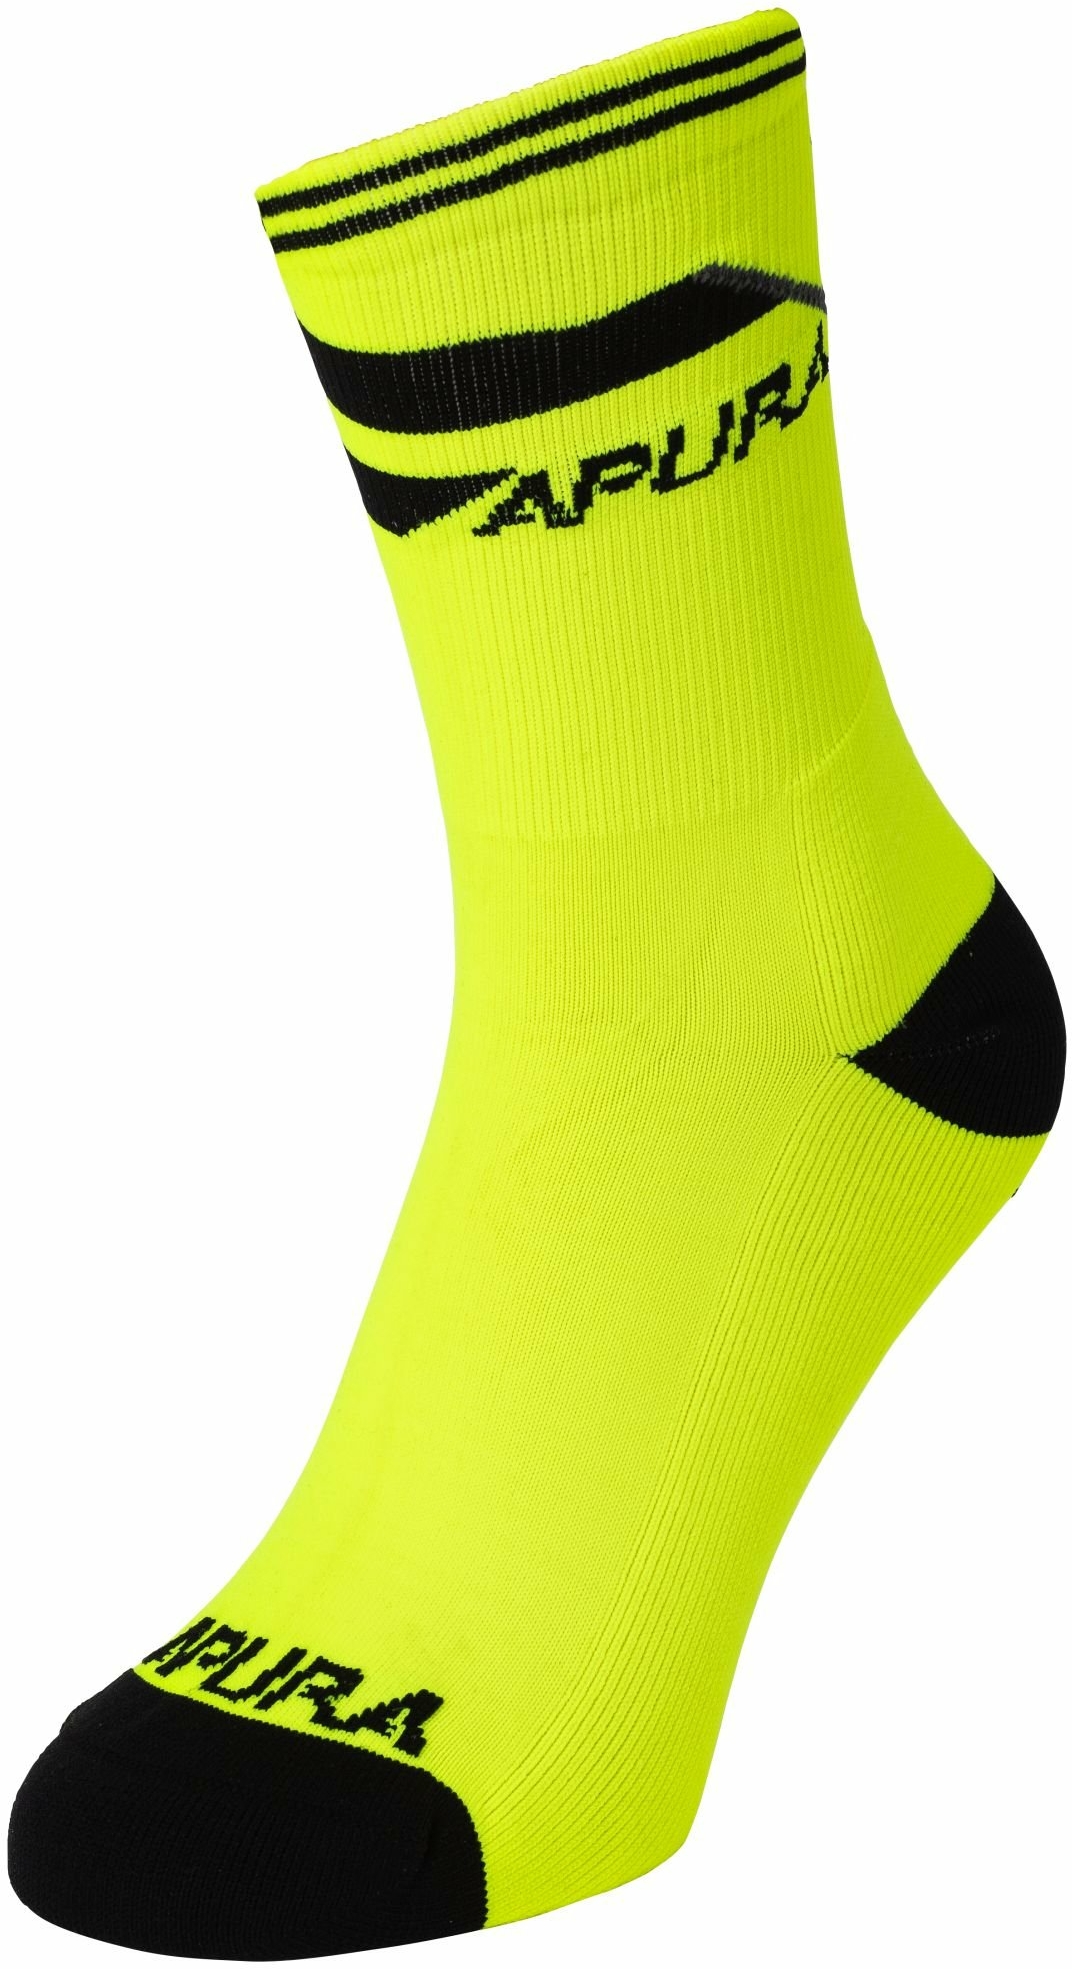 Apura Damen/Herren Socke Stripe 43-45 gelb